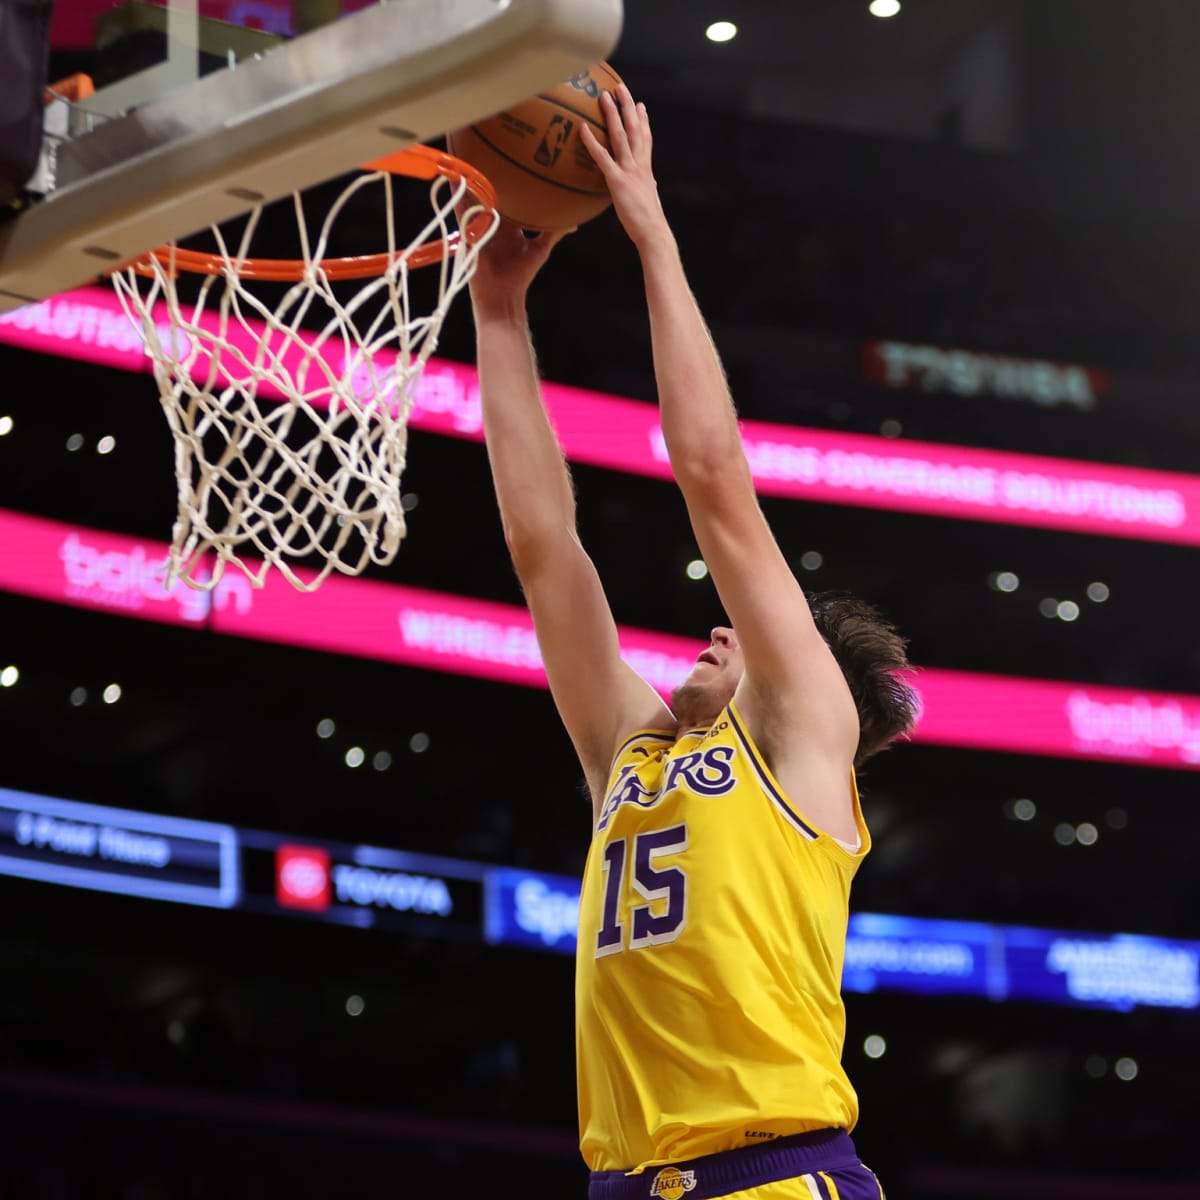 Born X Raised Celebrates LA Lakers This Holiday Season